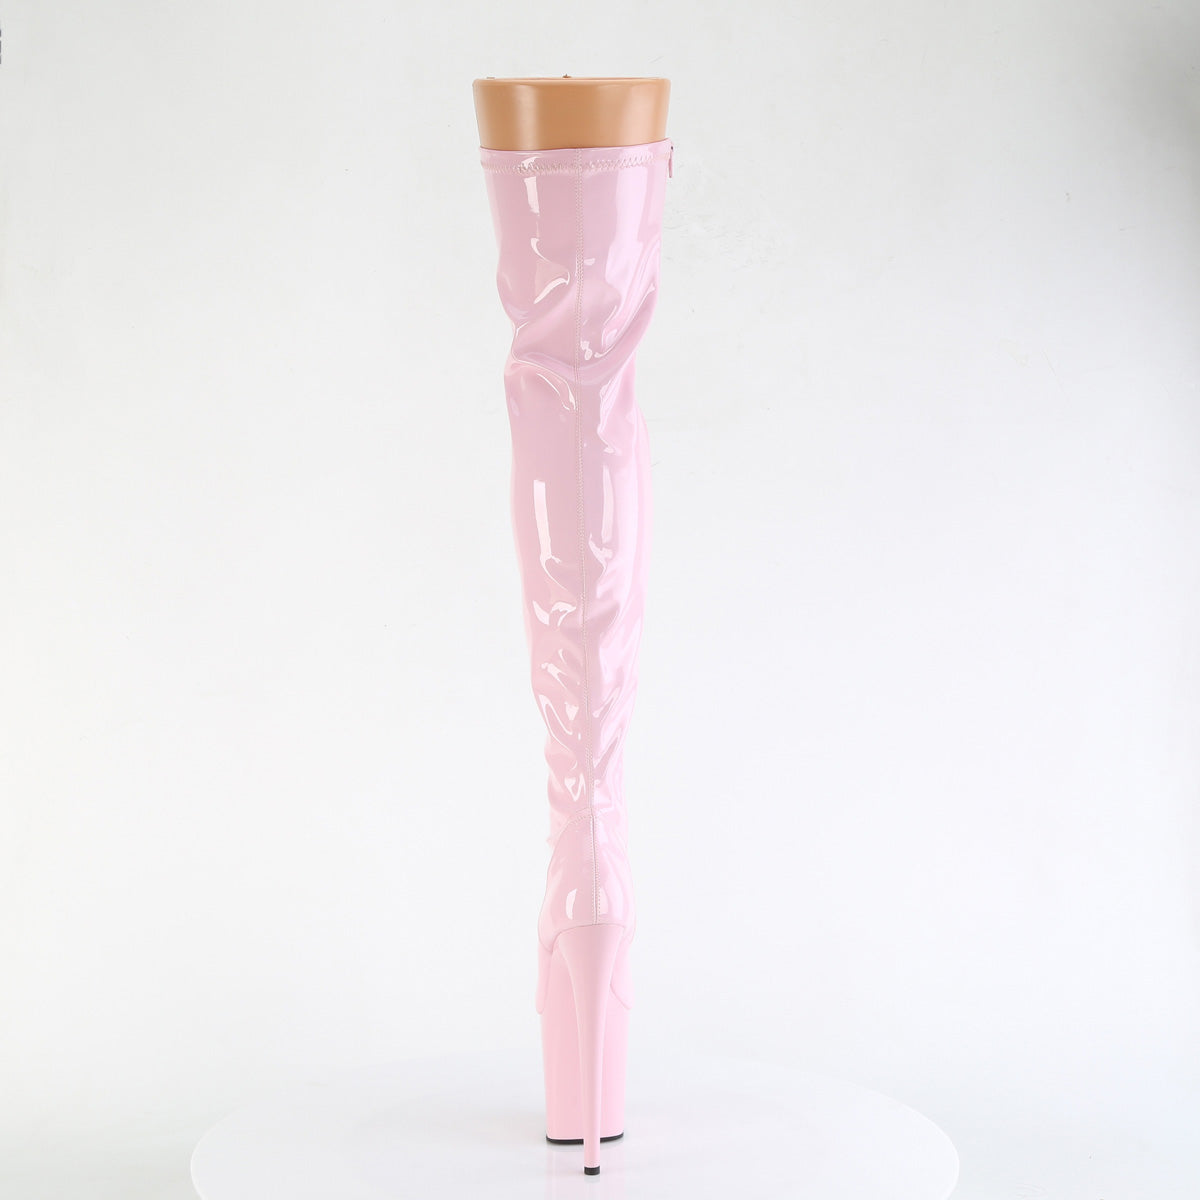 Flamingo 3000 Black Patent Thigh High 8" Pole Dance Boots